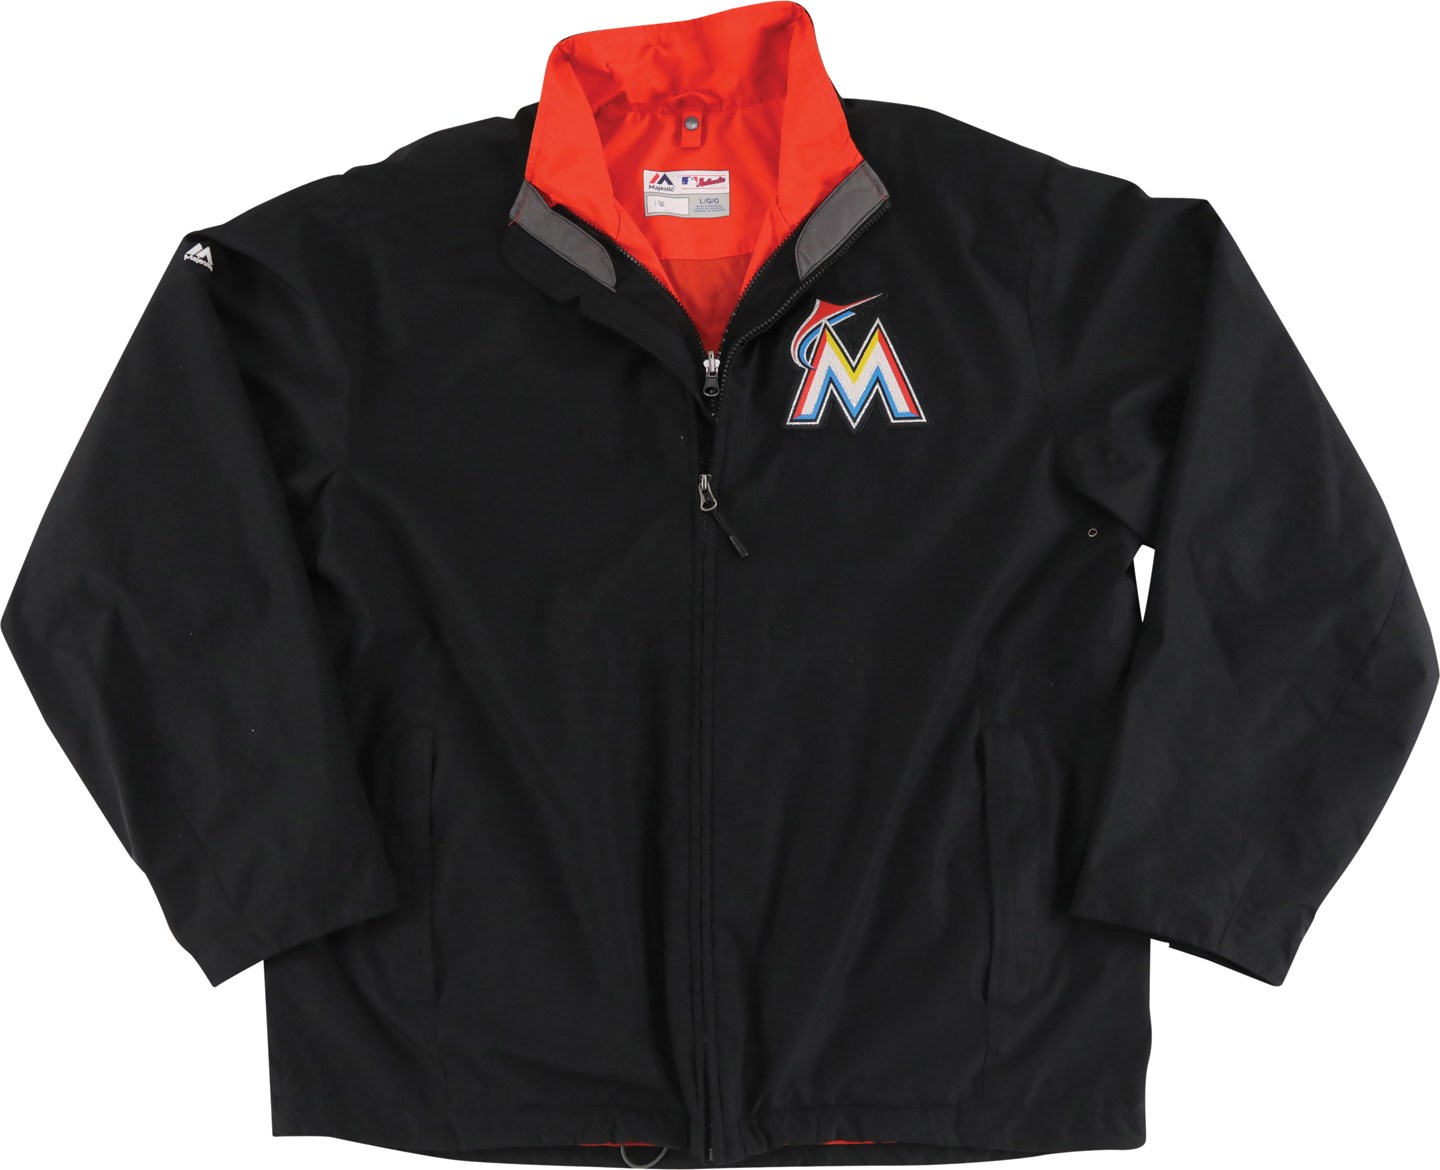 Baseball Equipment - Circa 2015 Jose Fernandez Miami Marlins Warm Up Jacket